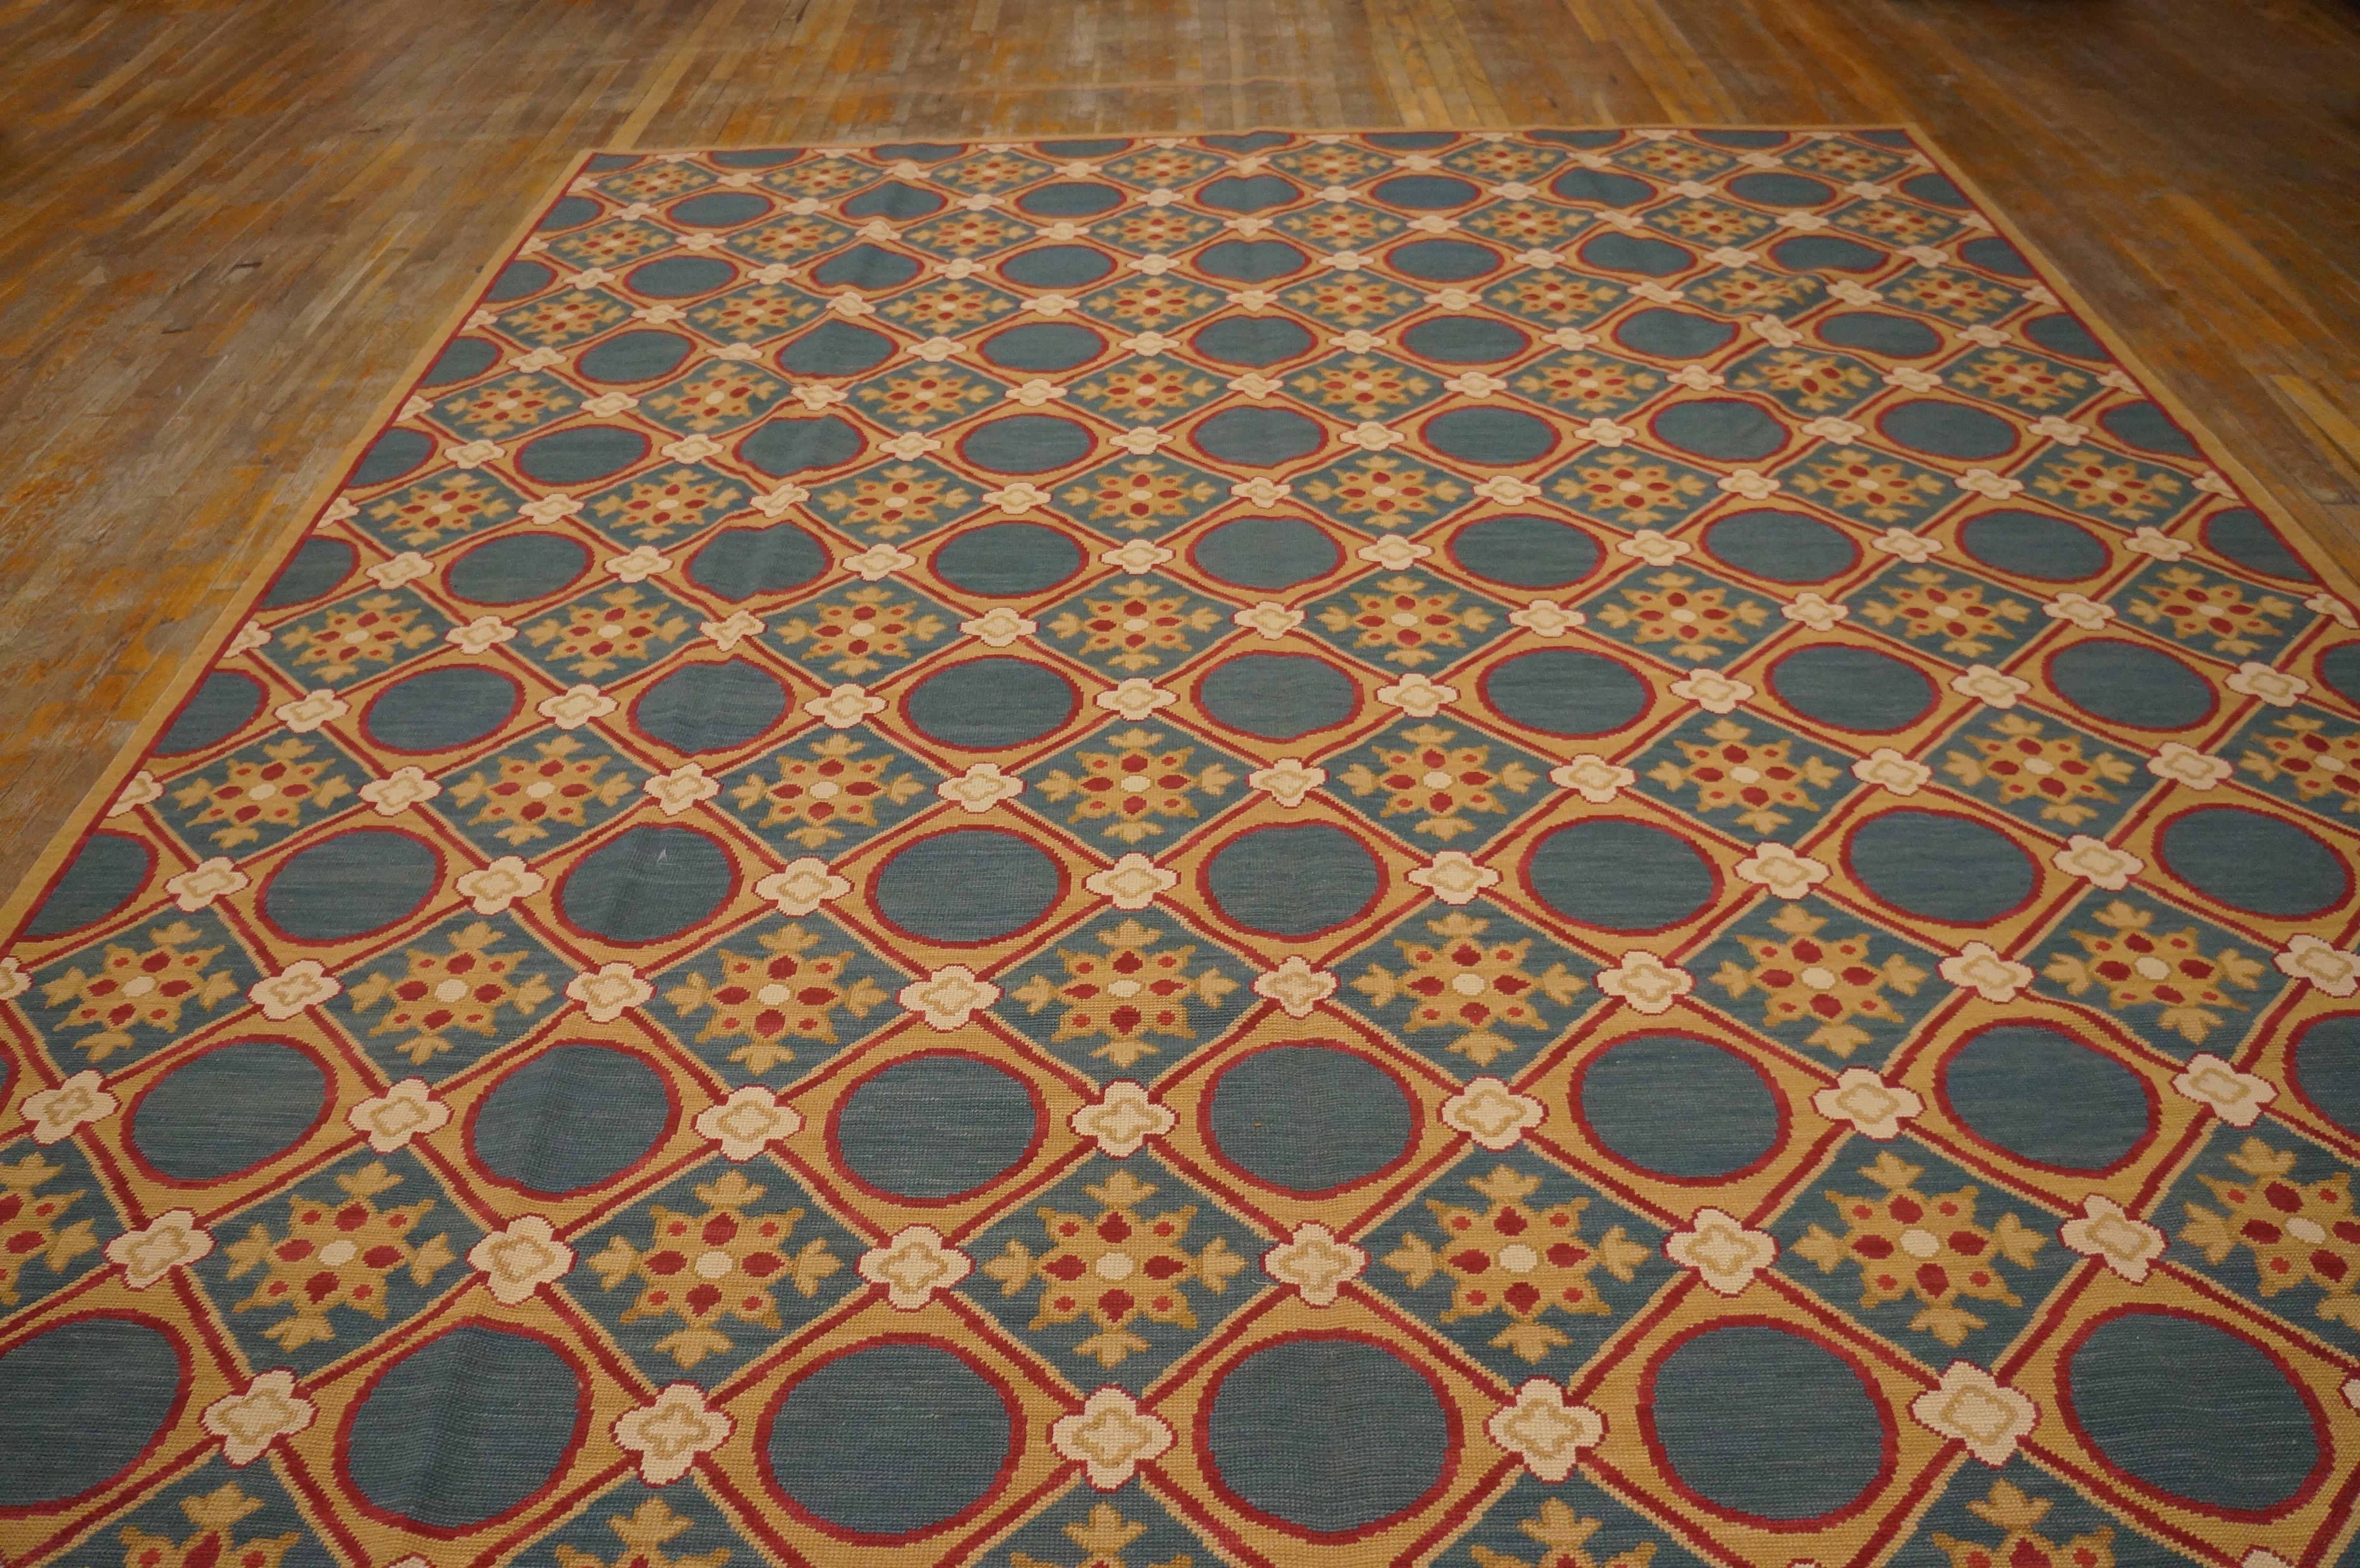  Contemporary Handwoven Needlepoint Flat Weave Carpet ( 9' x 12' - 275 x 365 cm  2